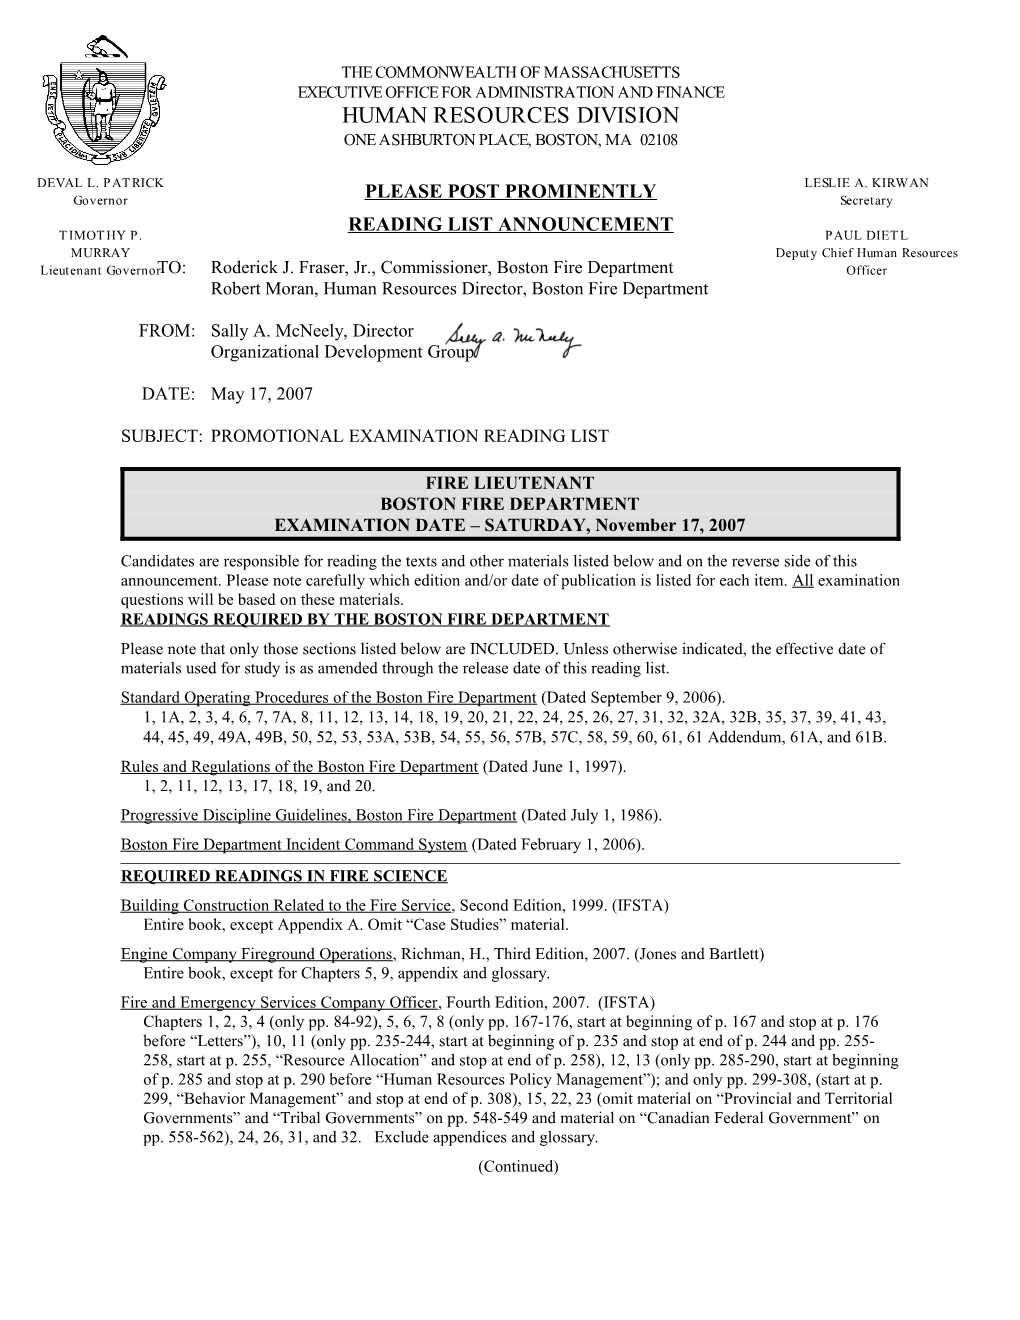 Reading List for November 2007 Boston Fire Lieutenant Departmental Promotional Examination